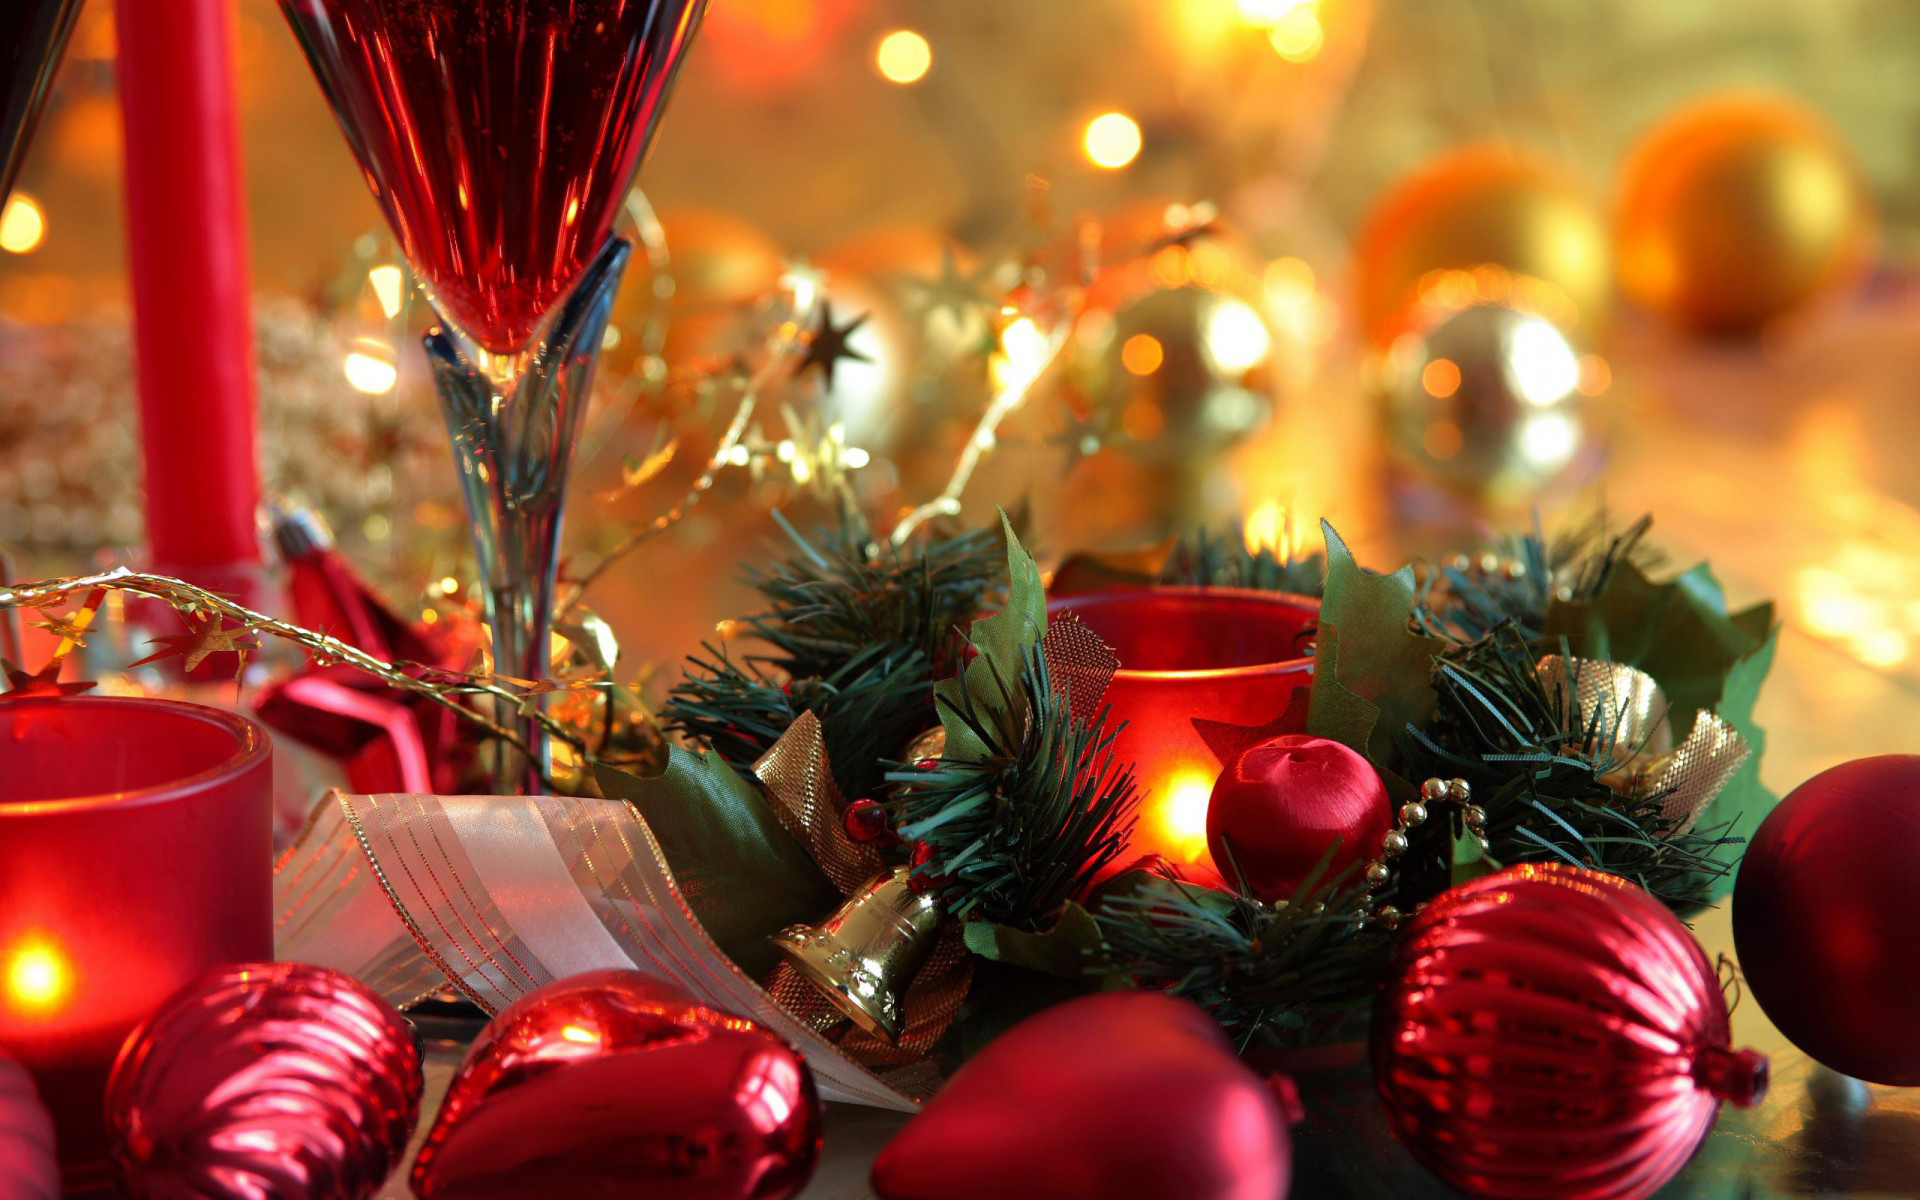 carta da parati navidad,decorazione natalizia,ornamento di natale,natale,vigilia di natale,illuminazione